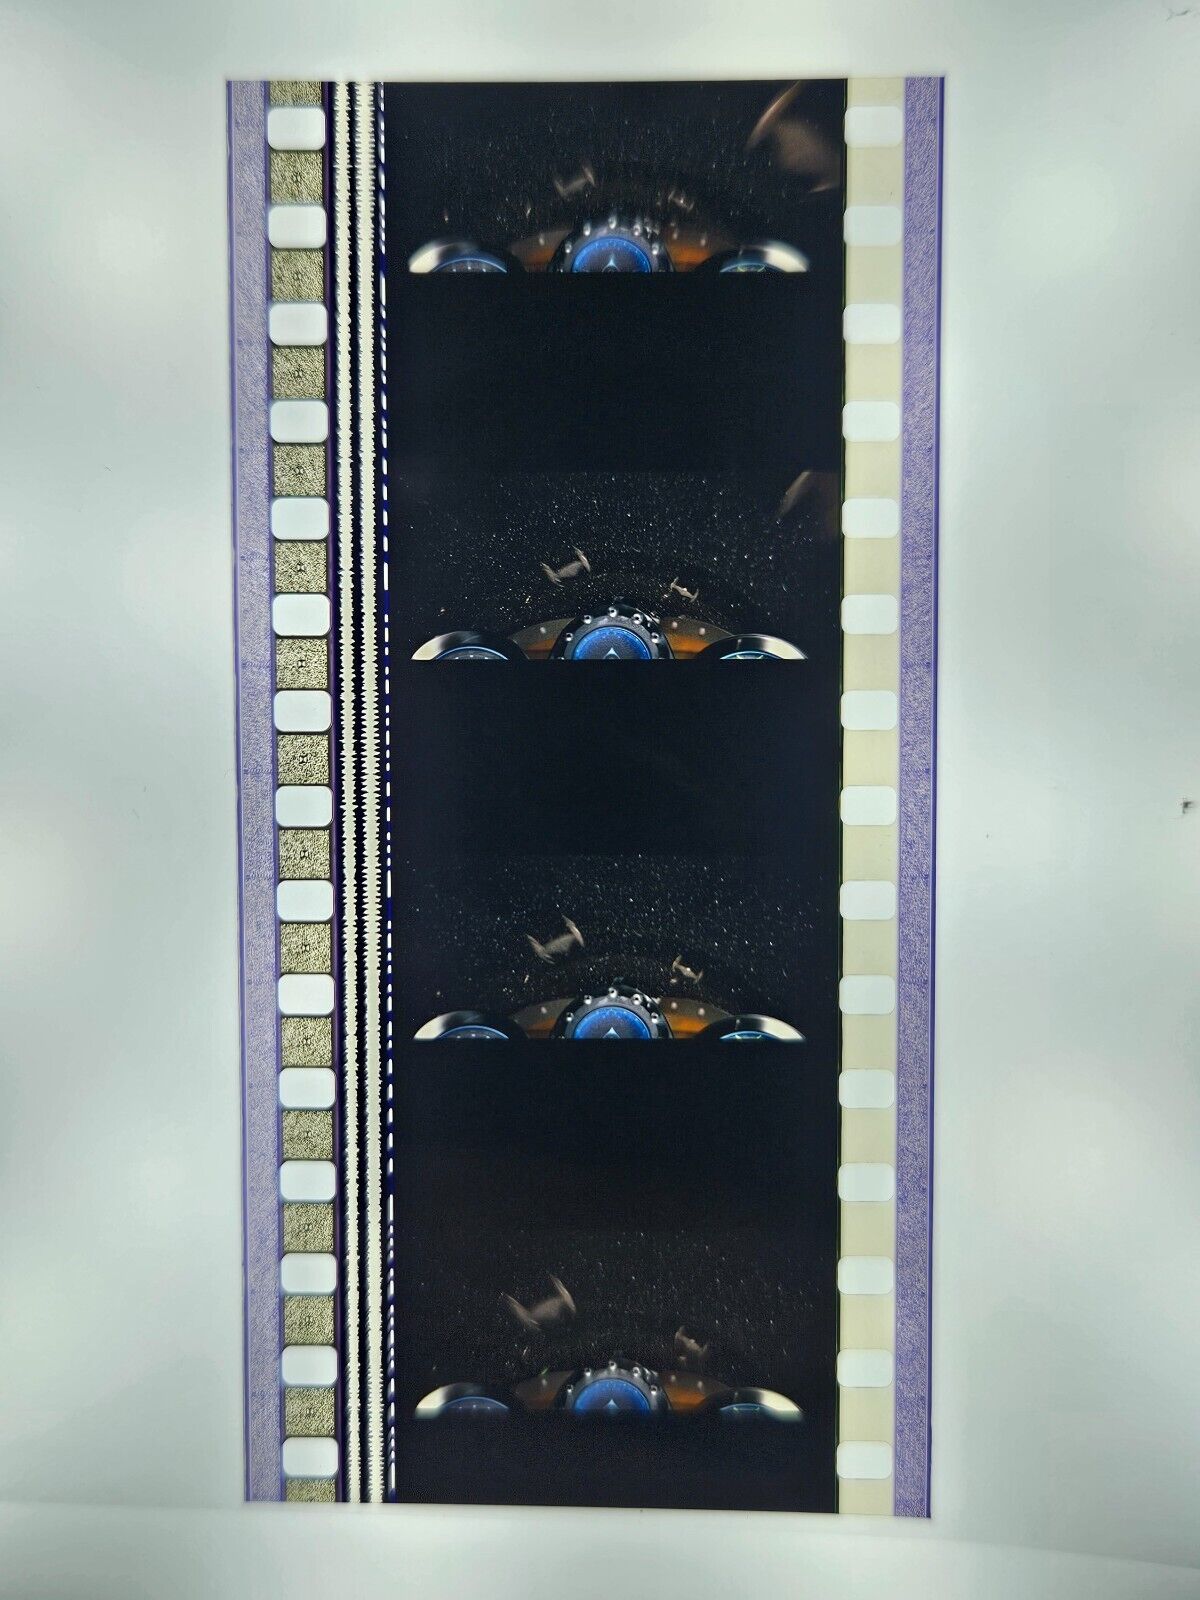 Space Battle Star Wars Episode 1 Phantom Menace 35mm Original Film Cells SW2082 Star Wars 35mm Film Cell - Hobby Gems